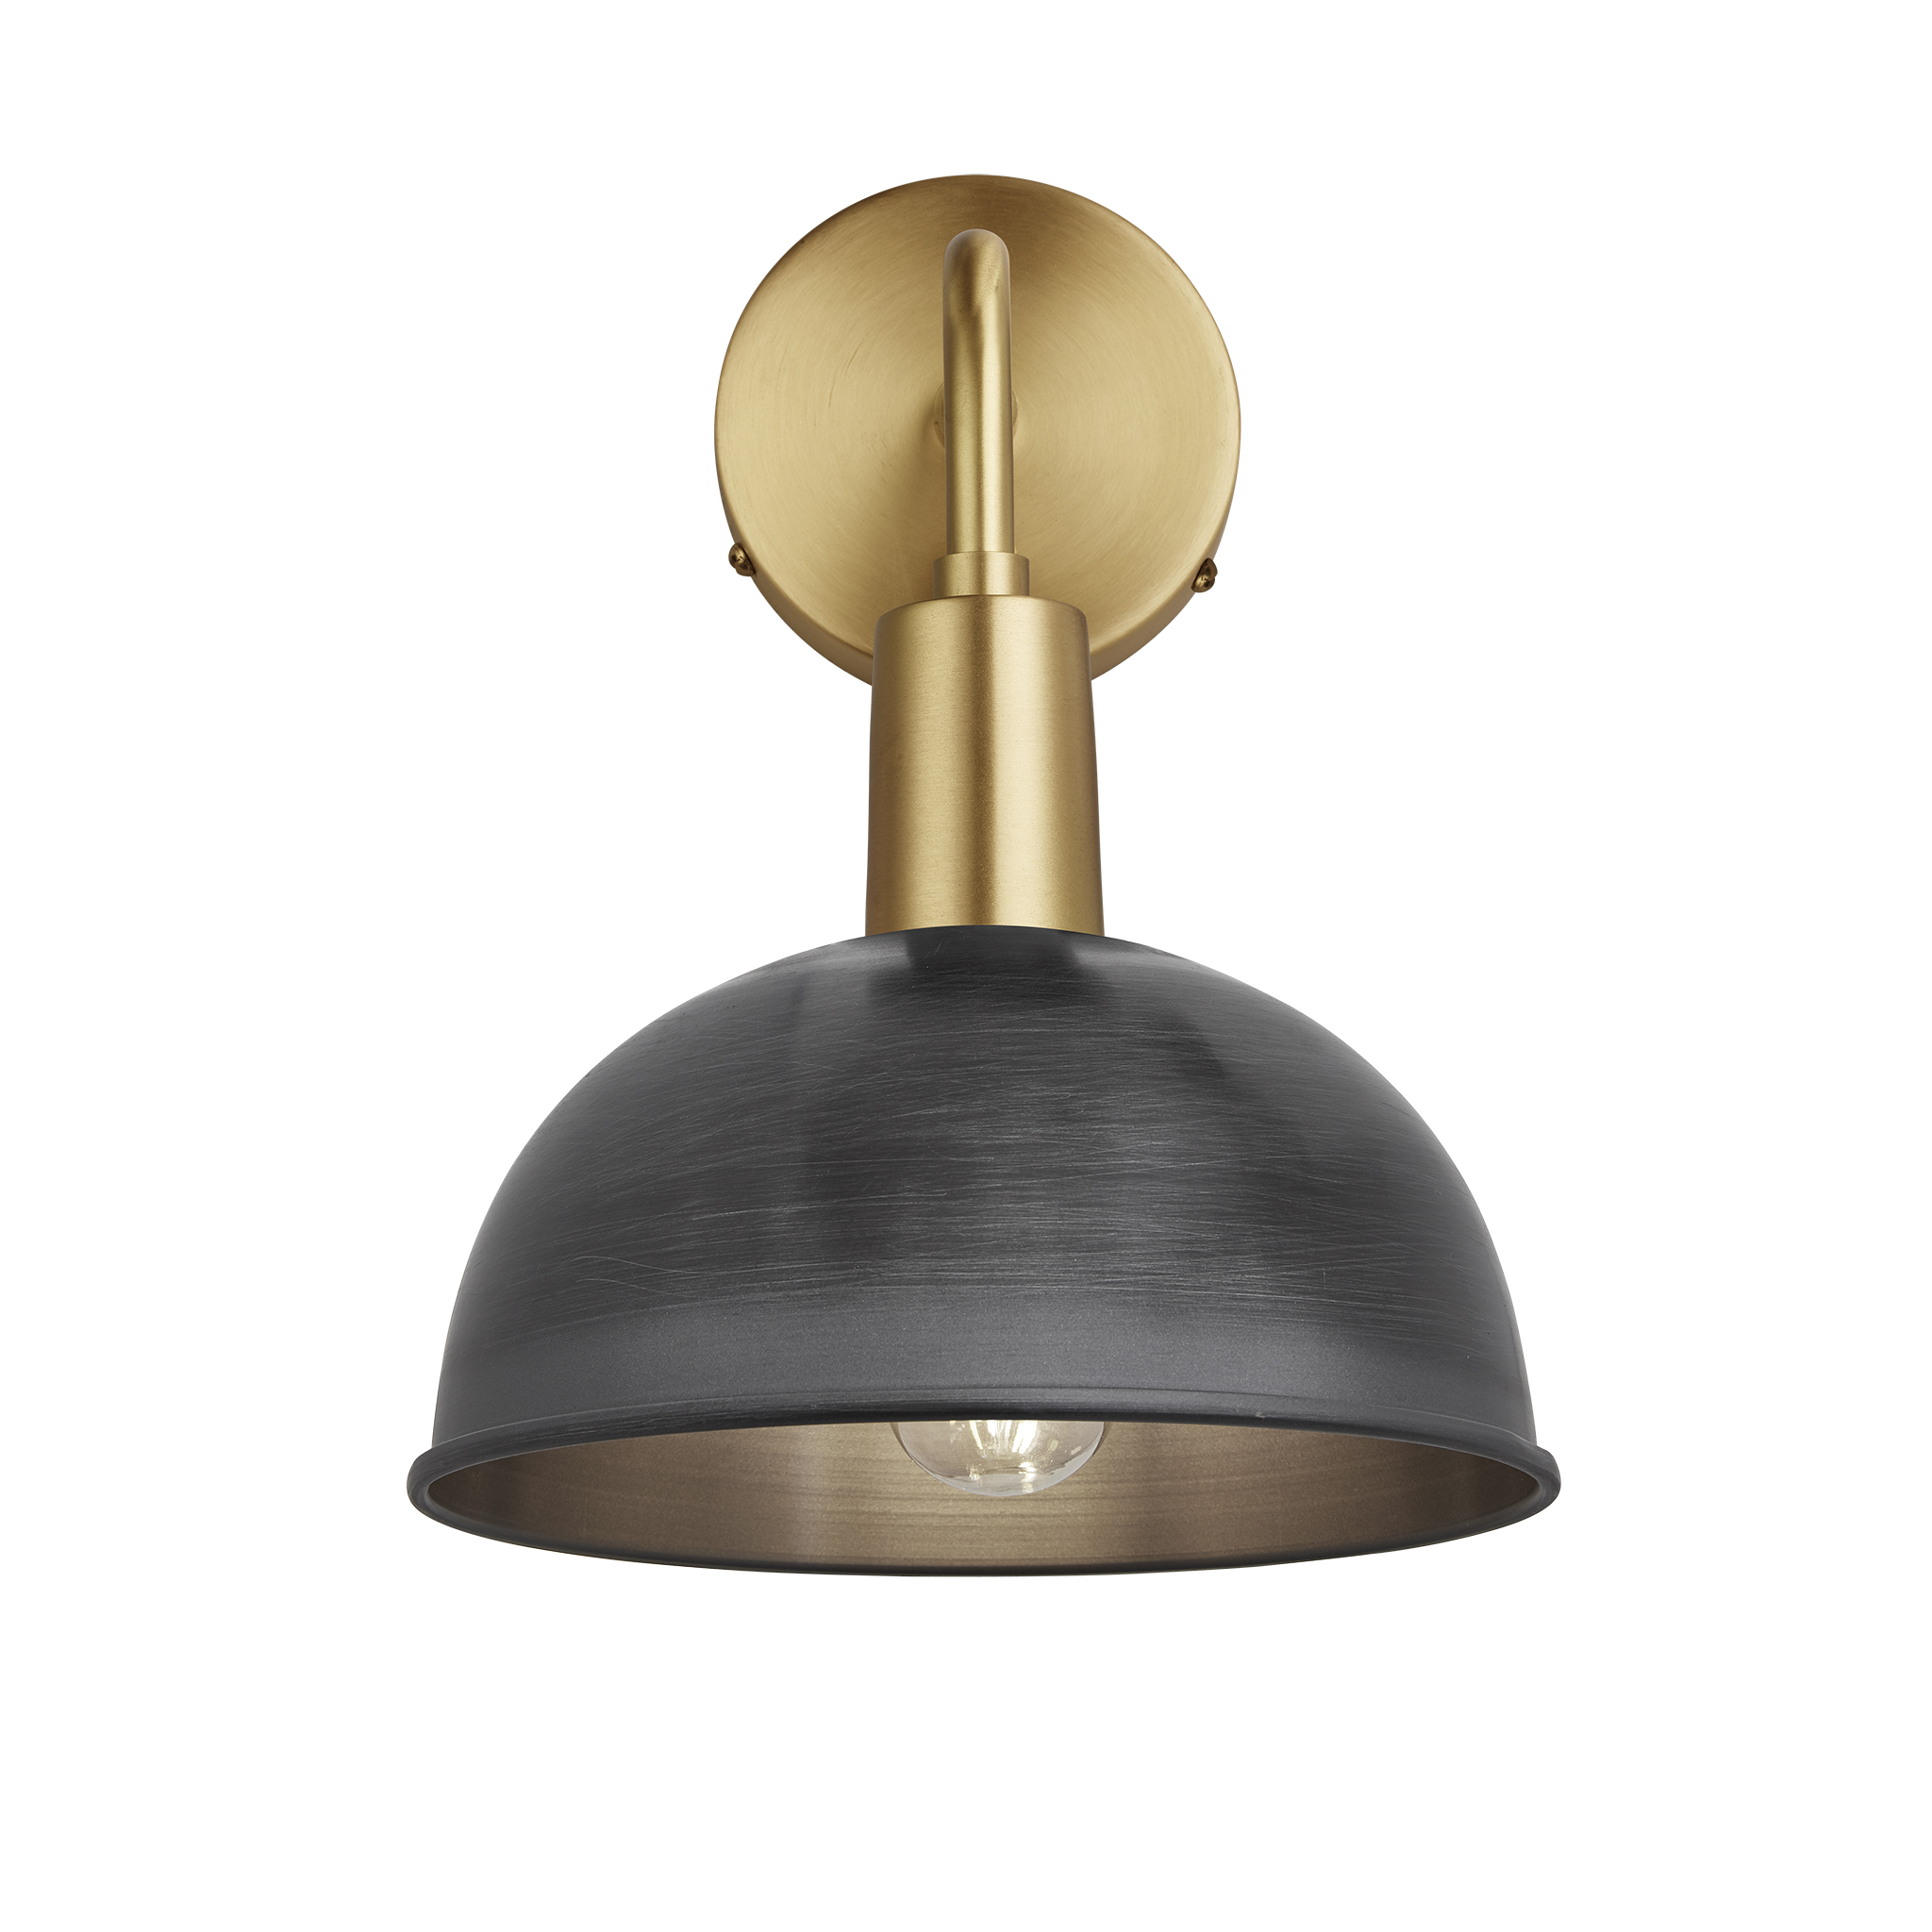  Sleek Dome Wall Light - 8 Inch - Pewter - Brass Holder